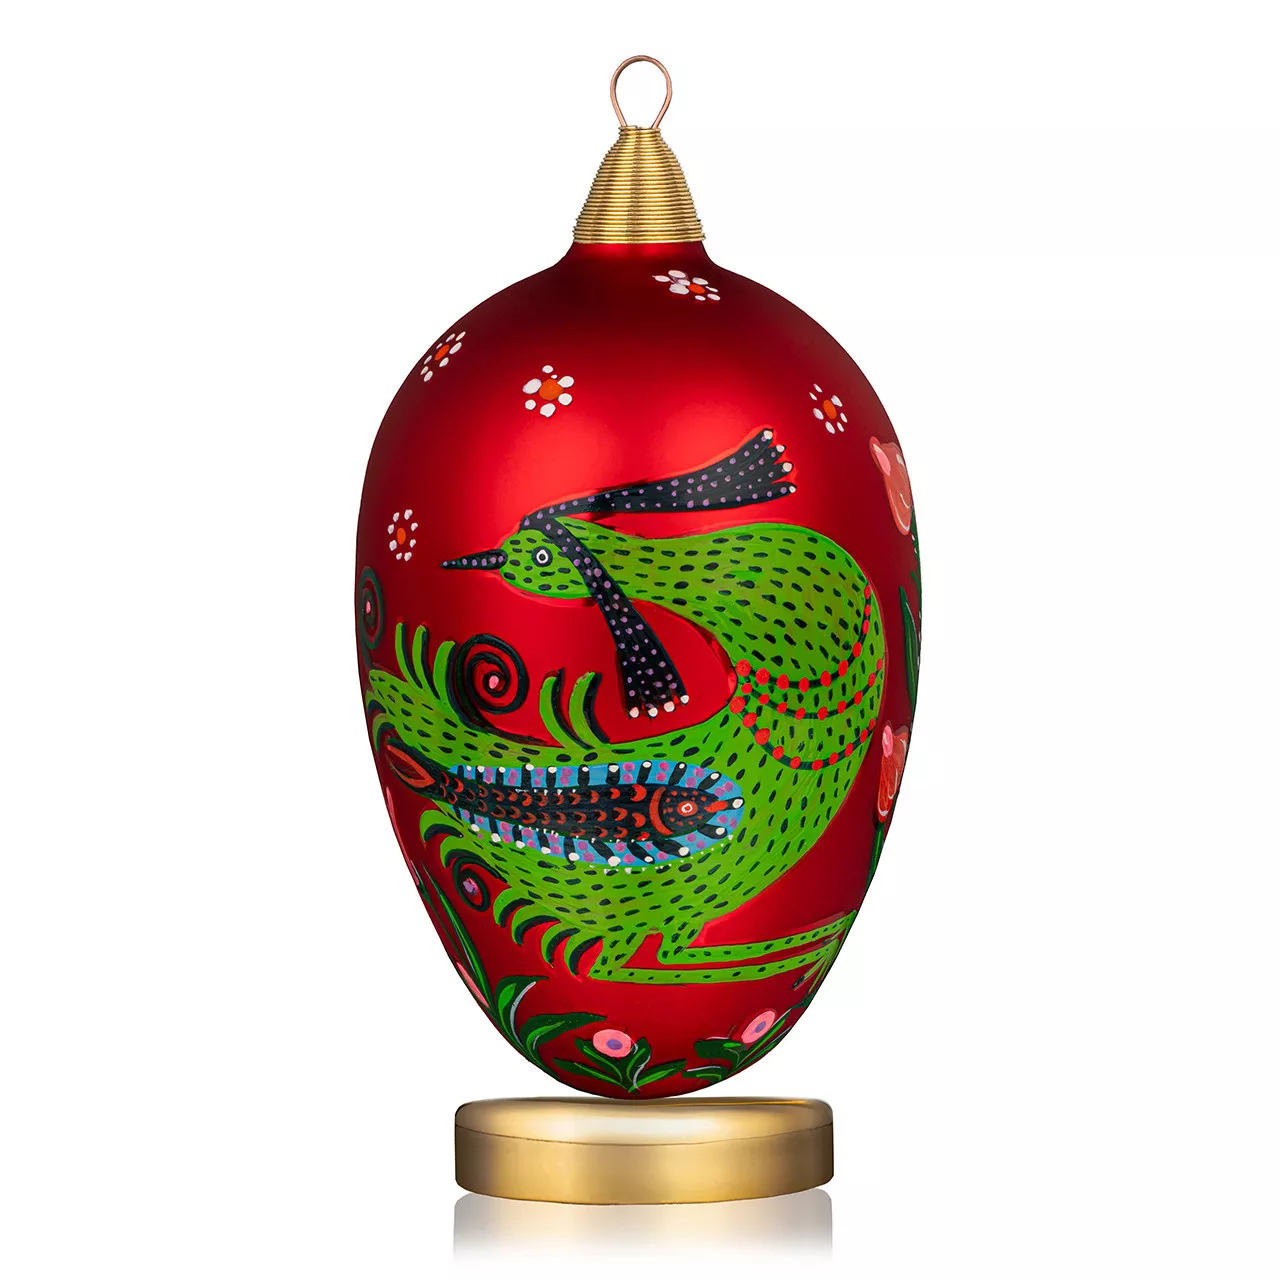 Игрушка новогодняя Crystal Christmas Prymachenko's Fantastic Beats Red, размер 14х8 см (MP008) - Фото nav 1